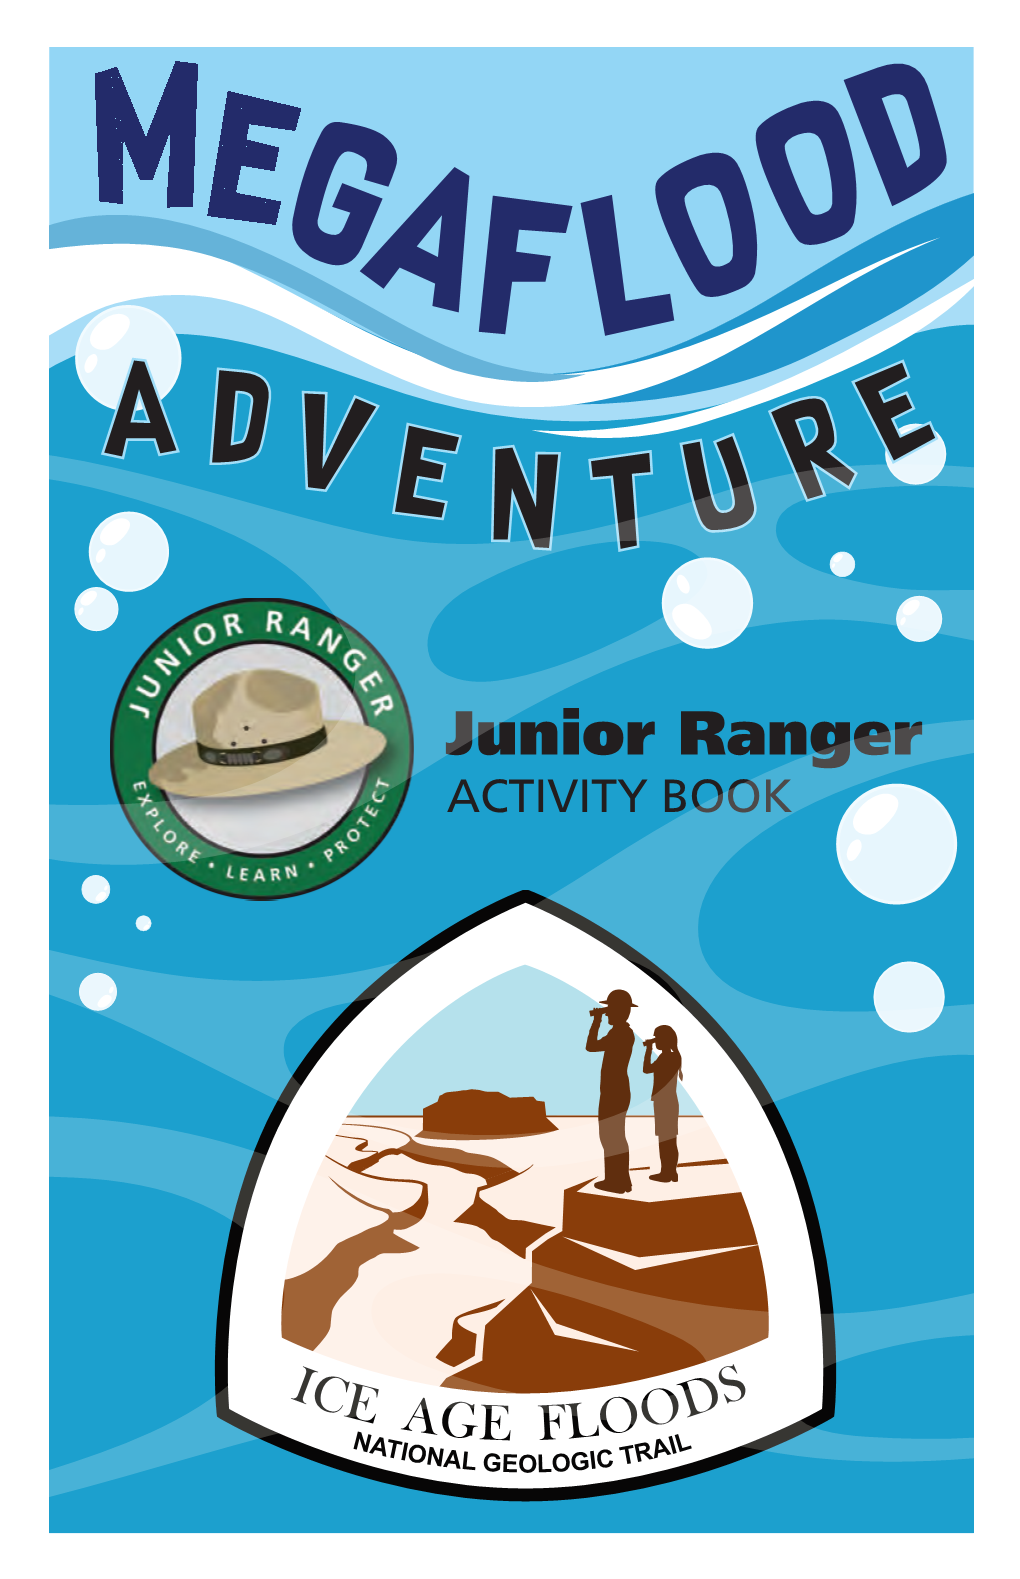 Junior Ranger ACTIVITY BOOK